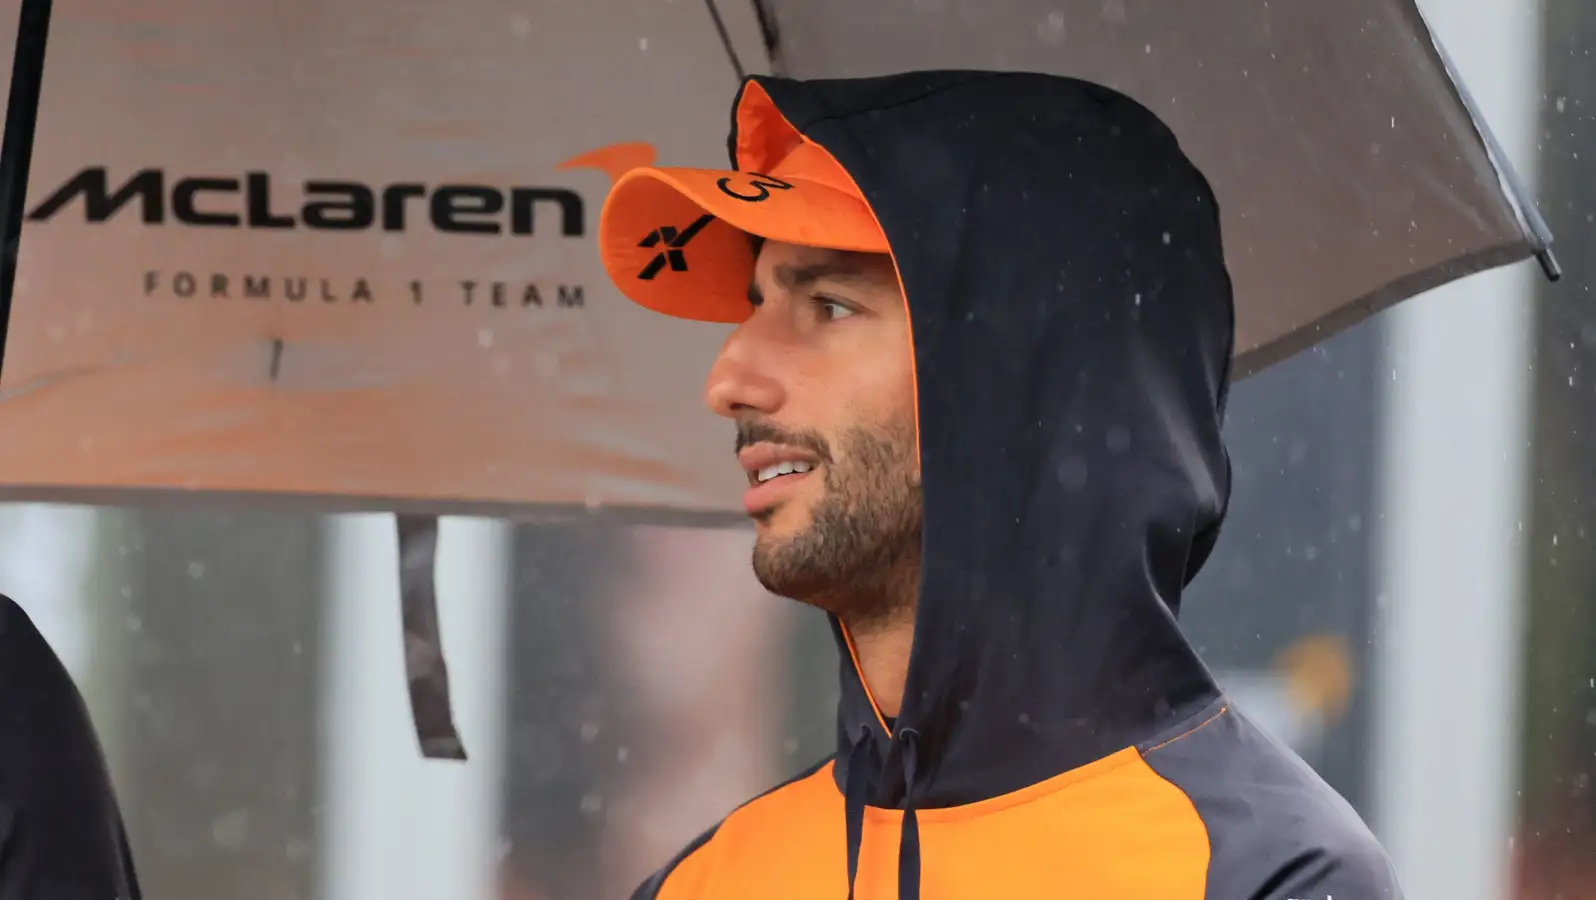 Daniel Ricciardo in the rain with a McLaren umbrella. Japan October 2022